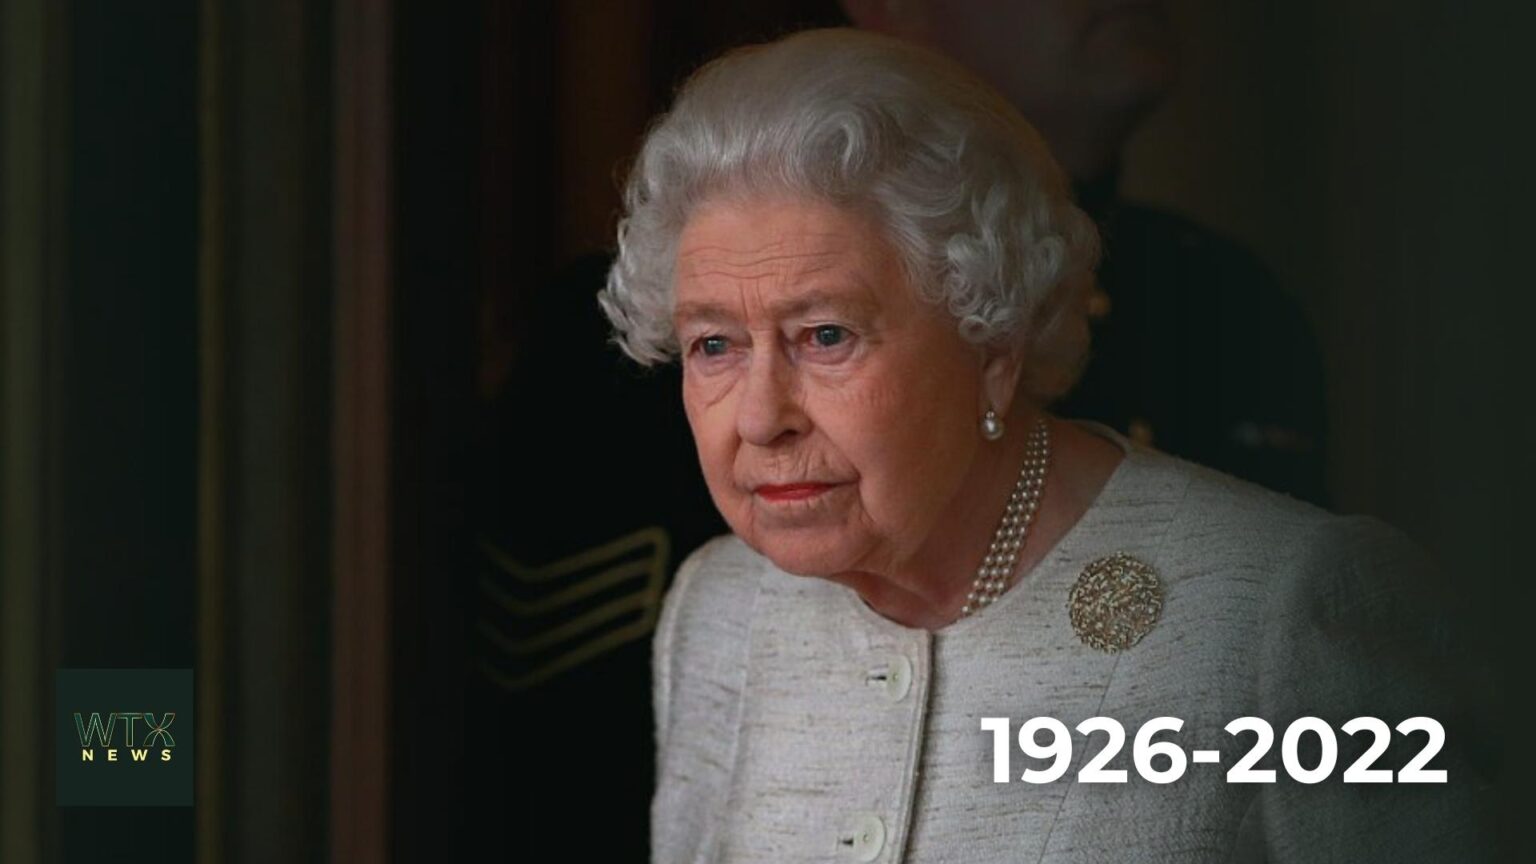 Queen Elizabeth has died aged 96